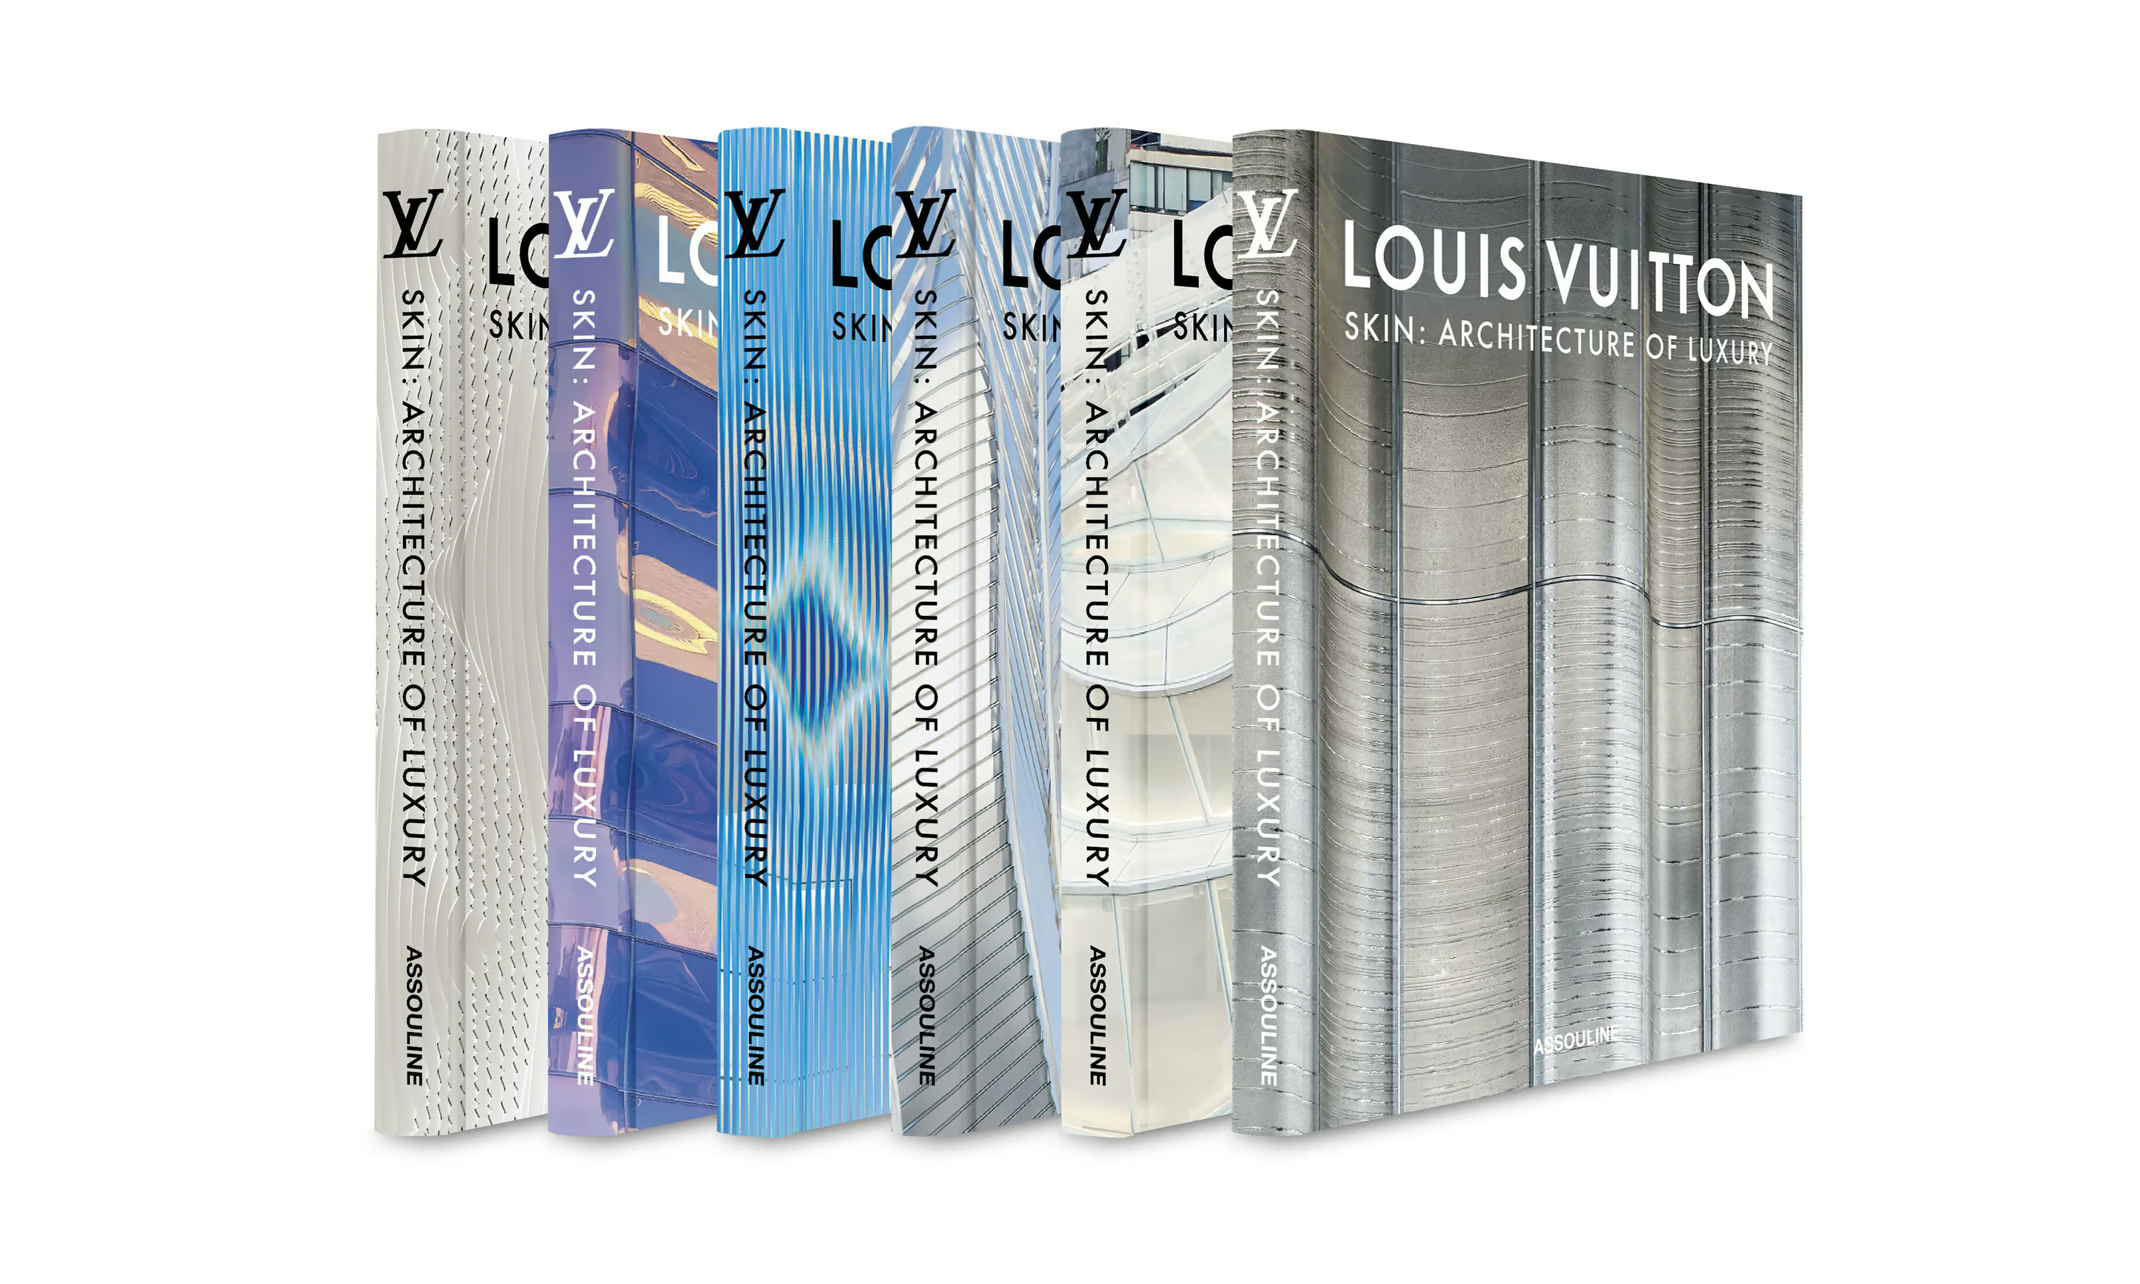 LOUIS VUITTON 发布《LOUIS VUITTON SKIN: THE ARCHITECTURE OF LUXURY》书籍